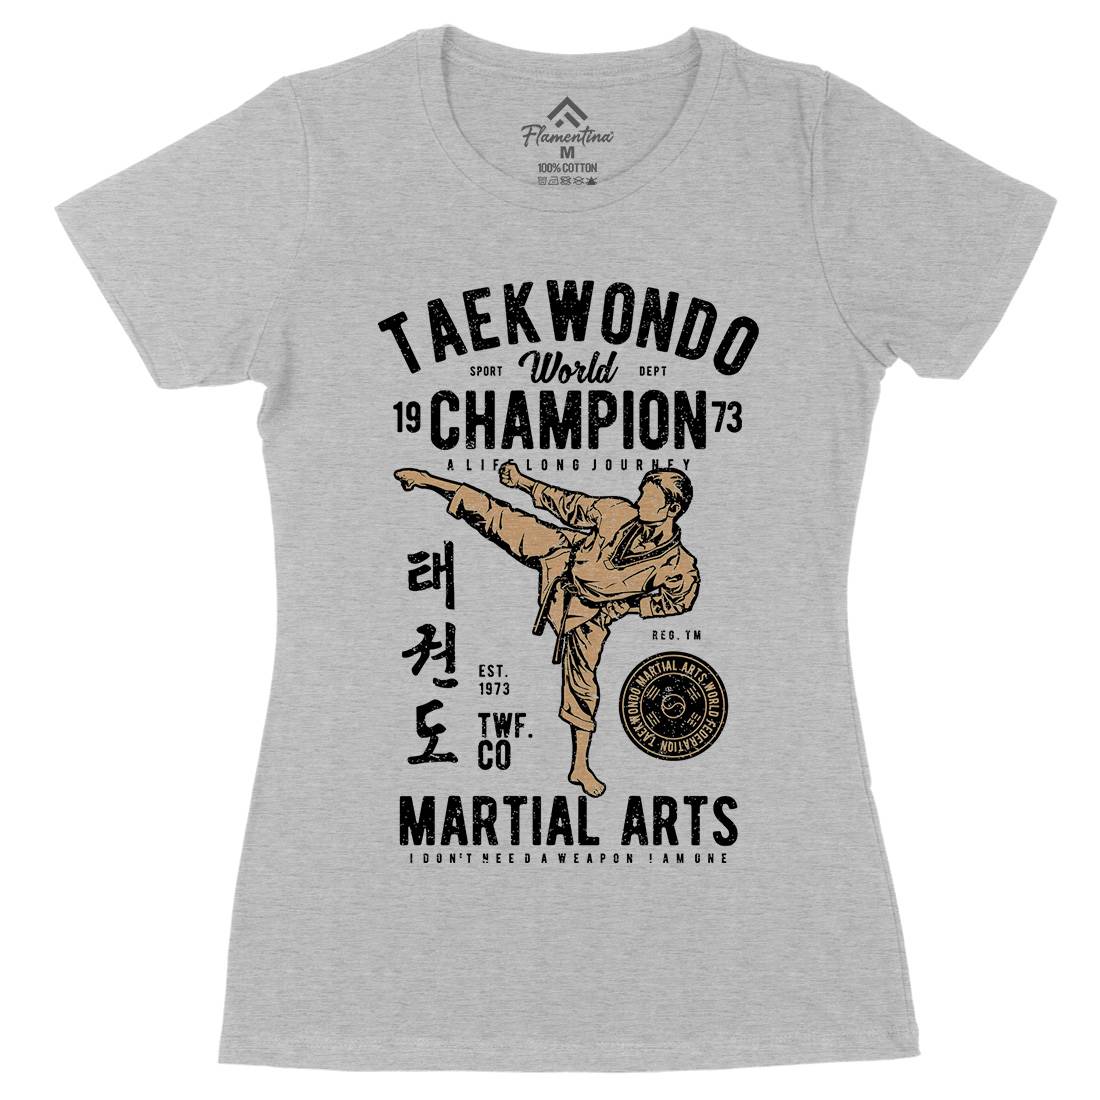 Taekwondo Womens Organic Crew Neck T-Shirt Sport A770